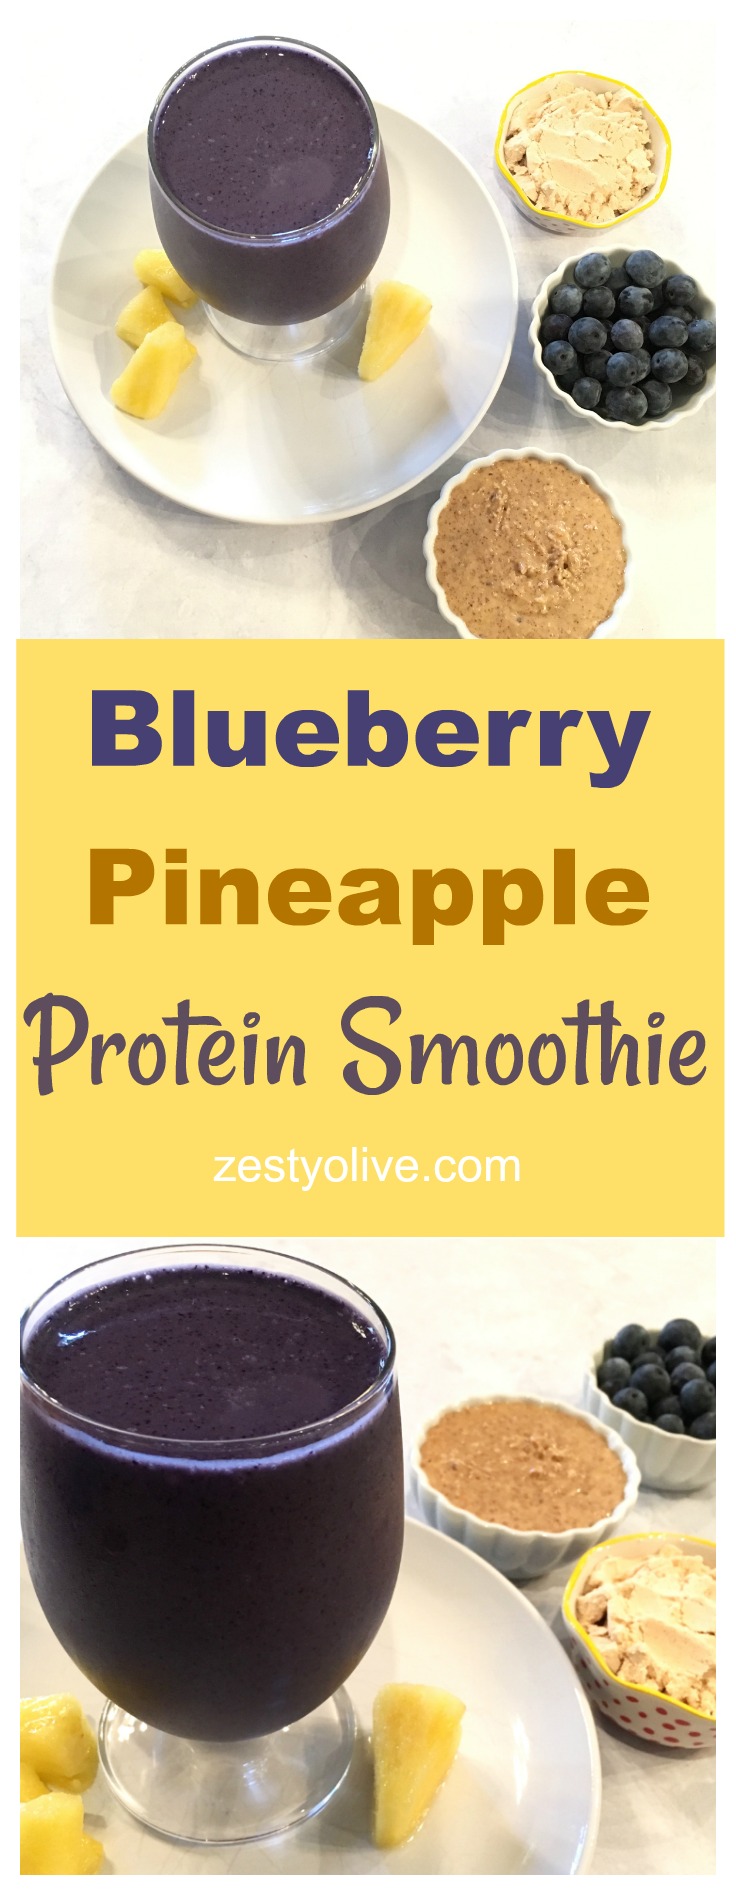 Blueberry Pineapple Protein Smoothie